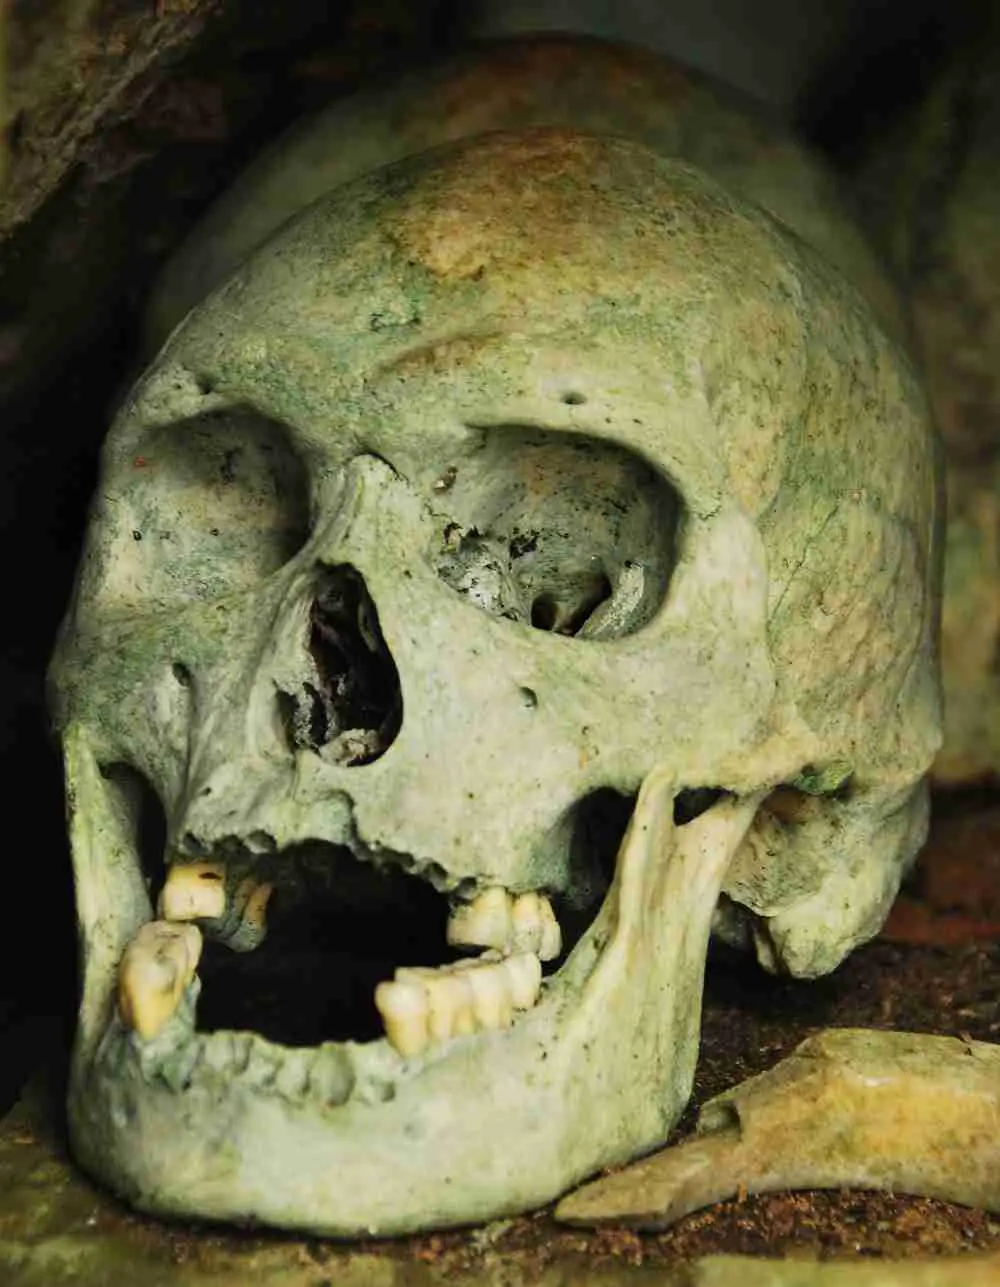 Human Skull | Solomon Islands Travel Blog | Skull Island - A Headhunter Confronter! | King Kong, Nusa Kunda, Skull Island, Solomon Islands, Things To Do In The Solomon Islands | Author: Anthony Bianco - The Travel Tart Blog